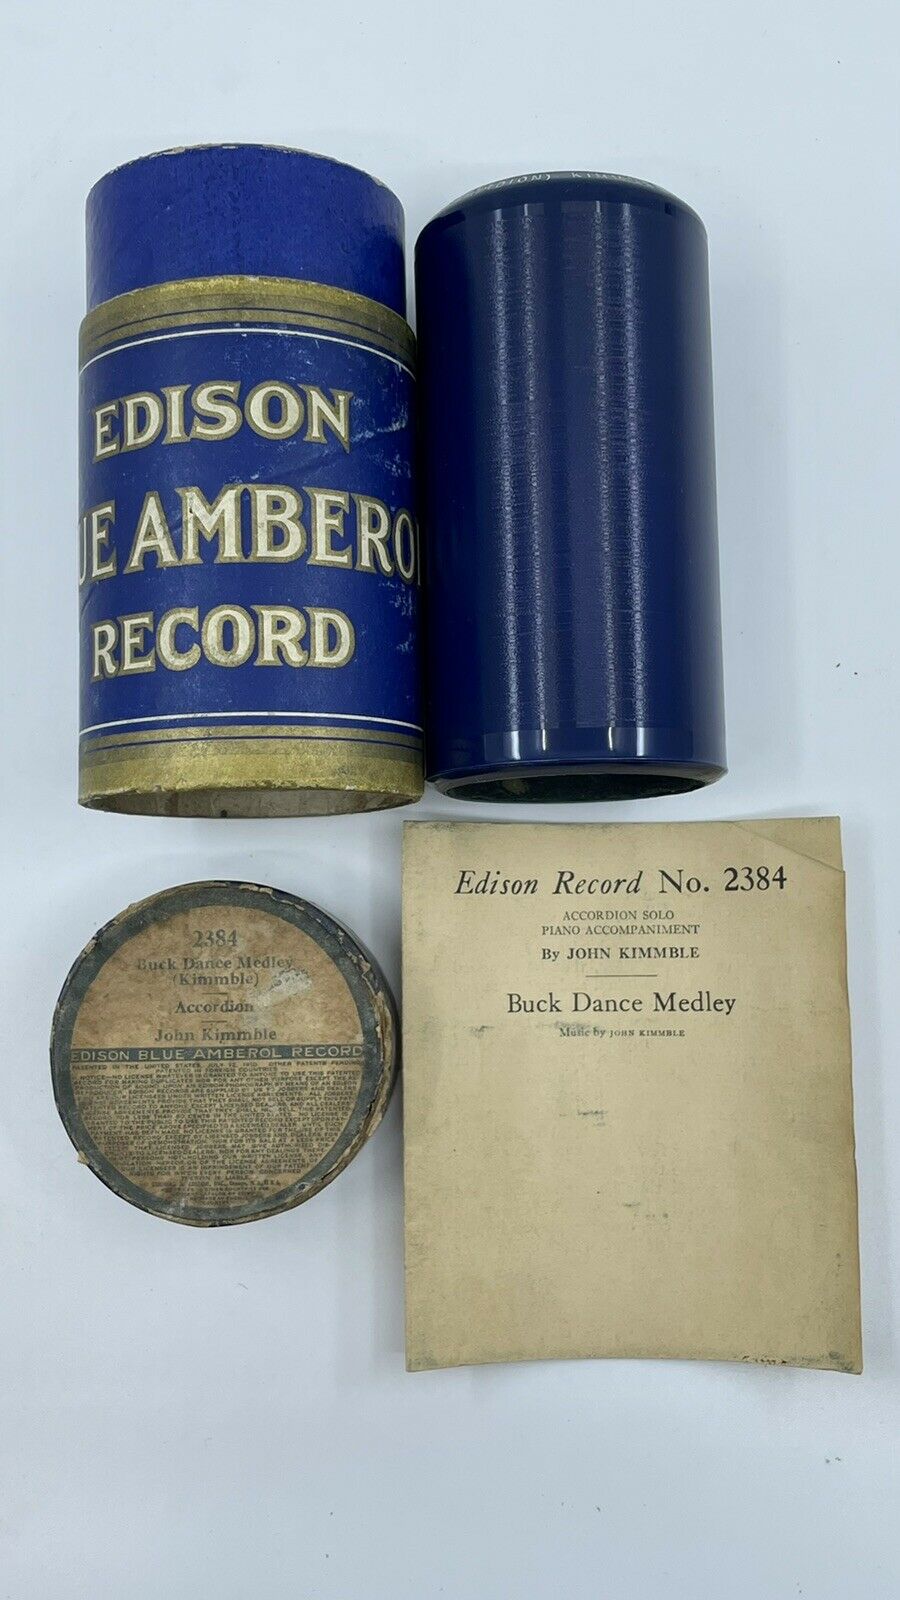 Edison Blue Amberol 2384 “buck Dance Medley” By John Kimmble